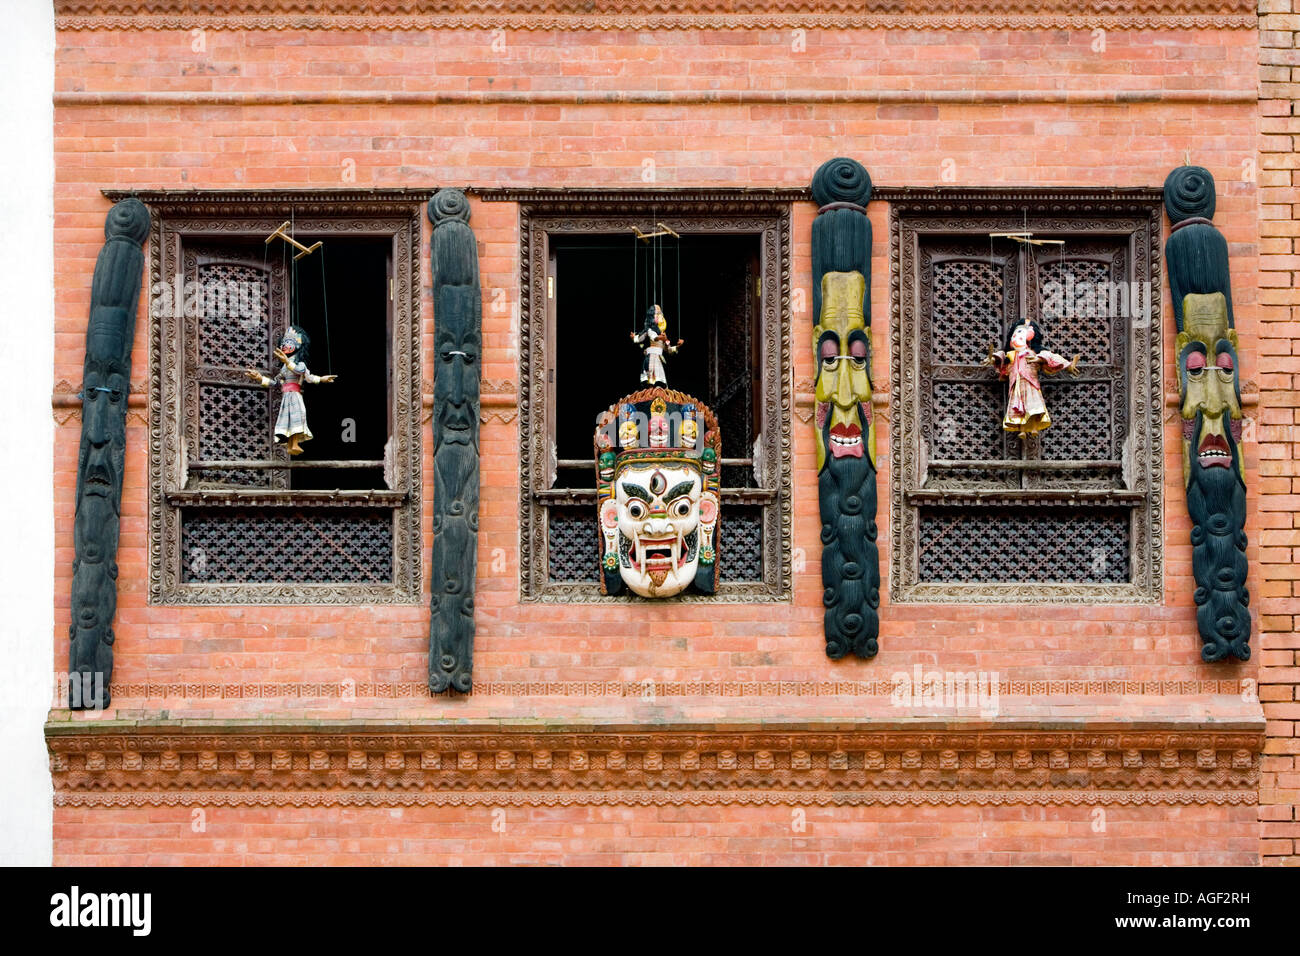 Nepalise masks and puppets in a window. Durbar Square, Kathmandu, Nepal Stock Photo